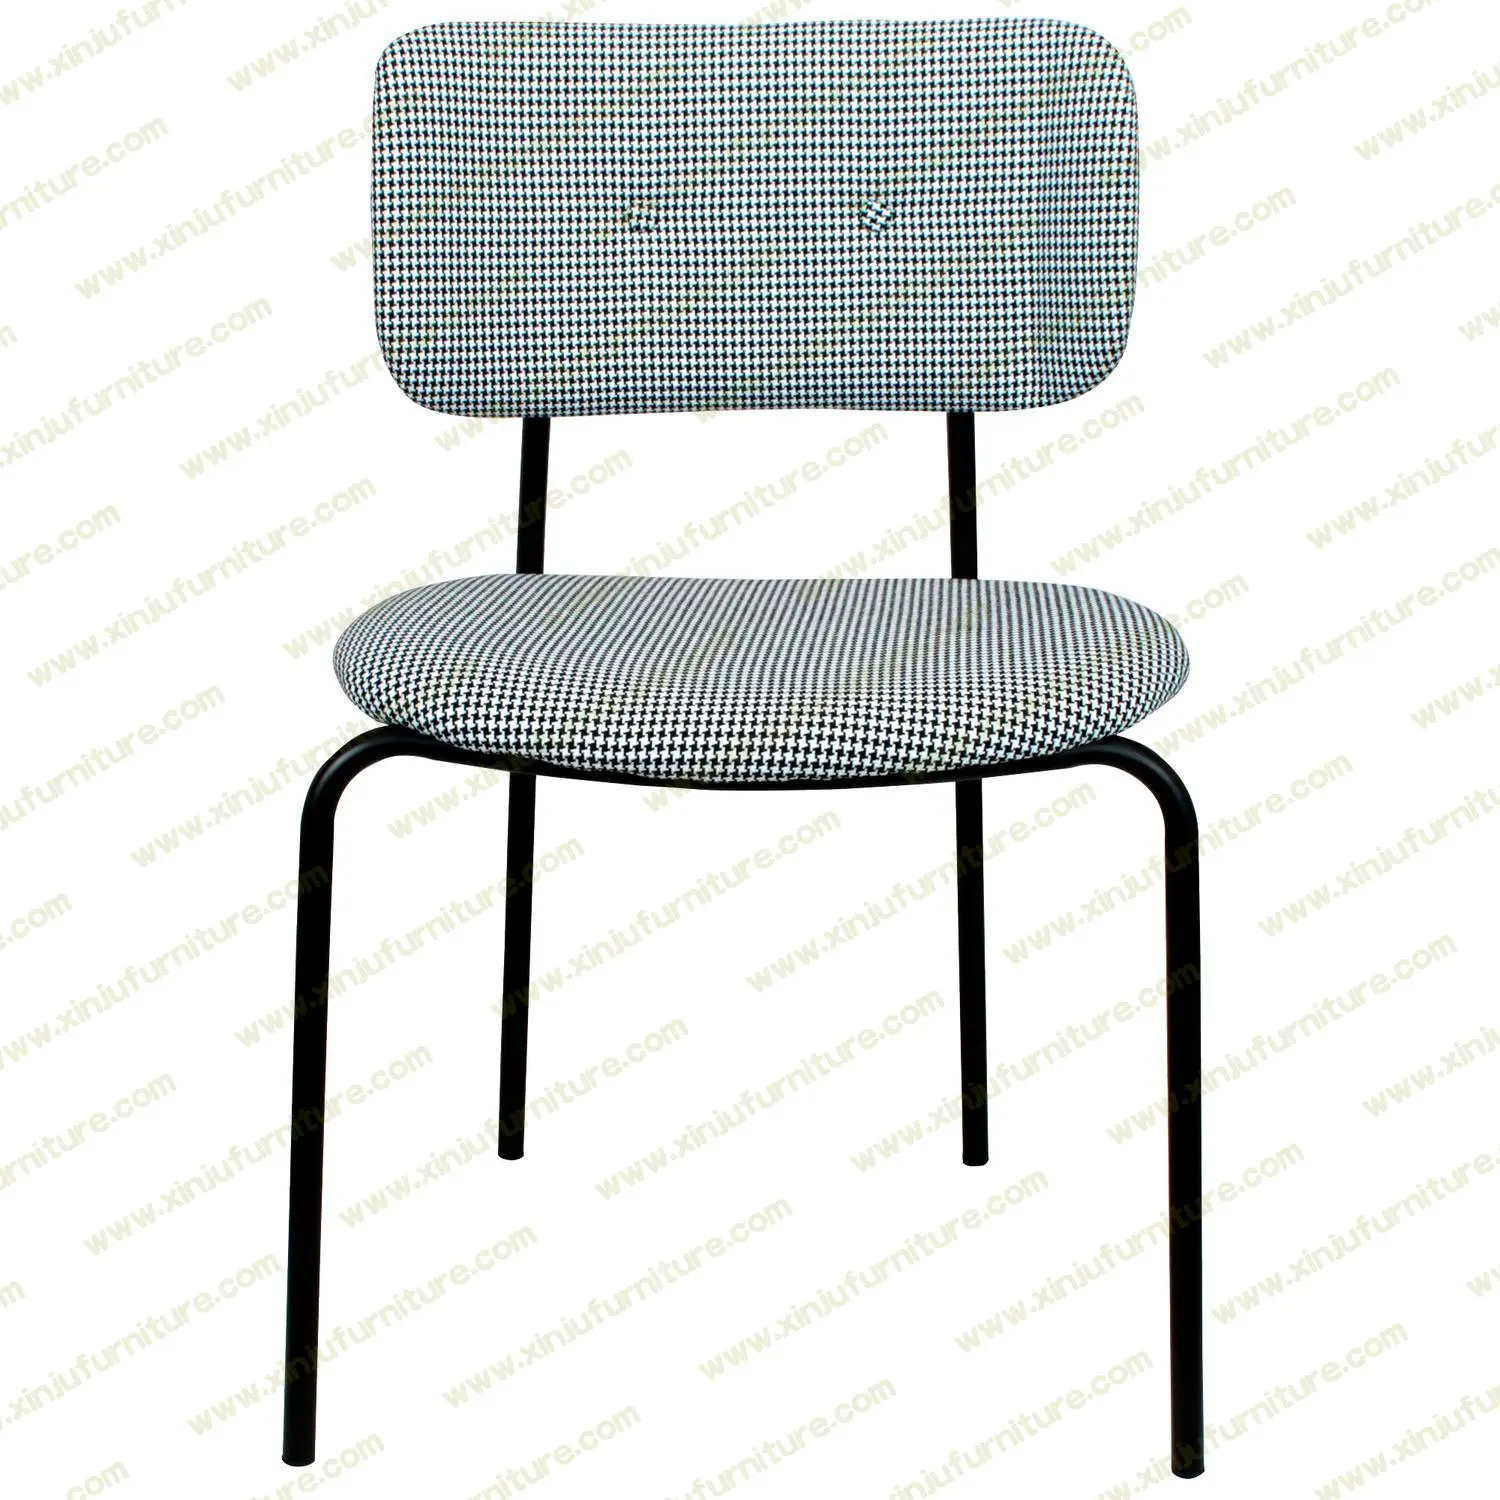 Idyllic simple dining chair